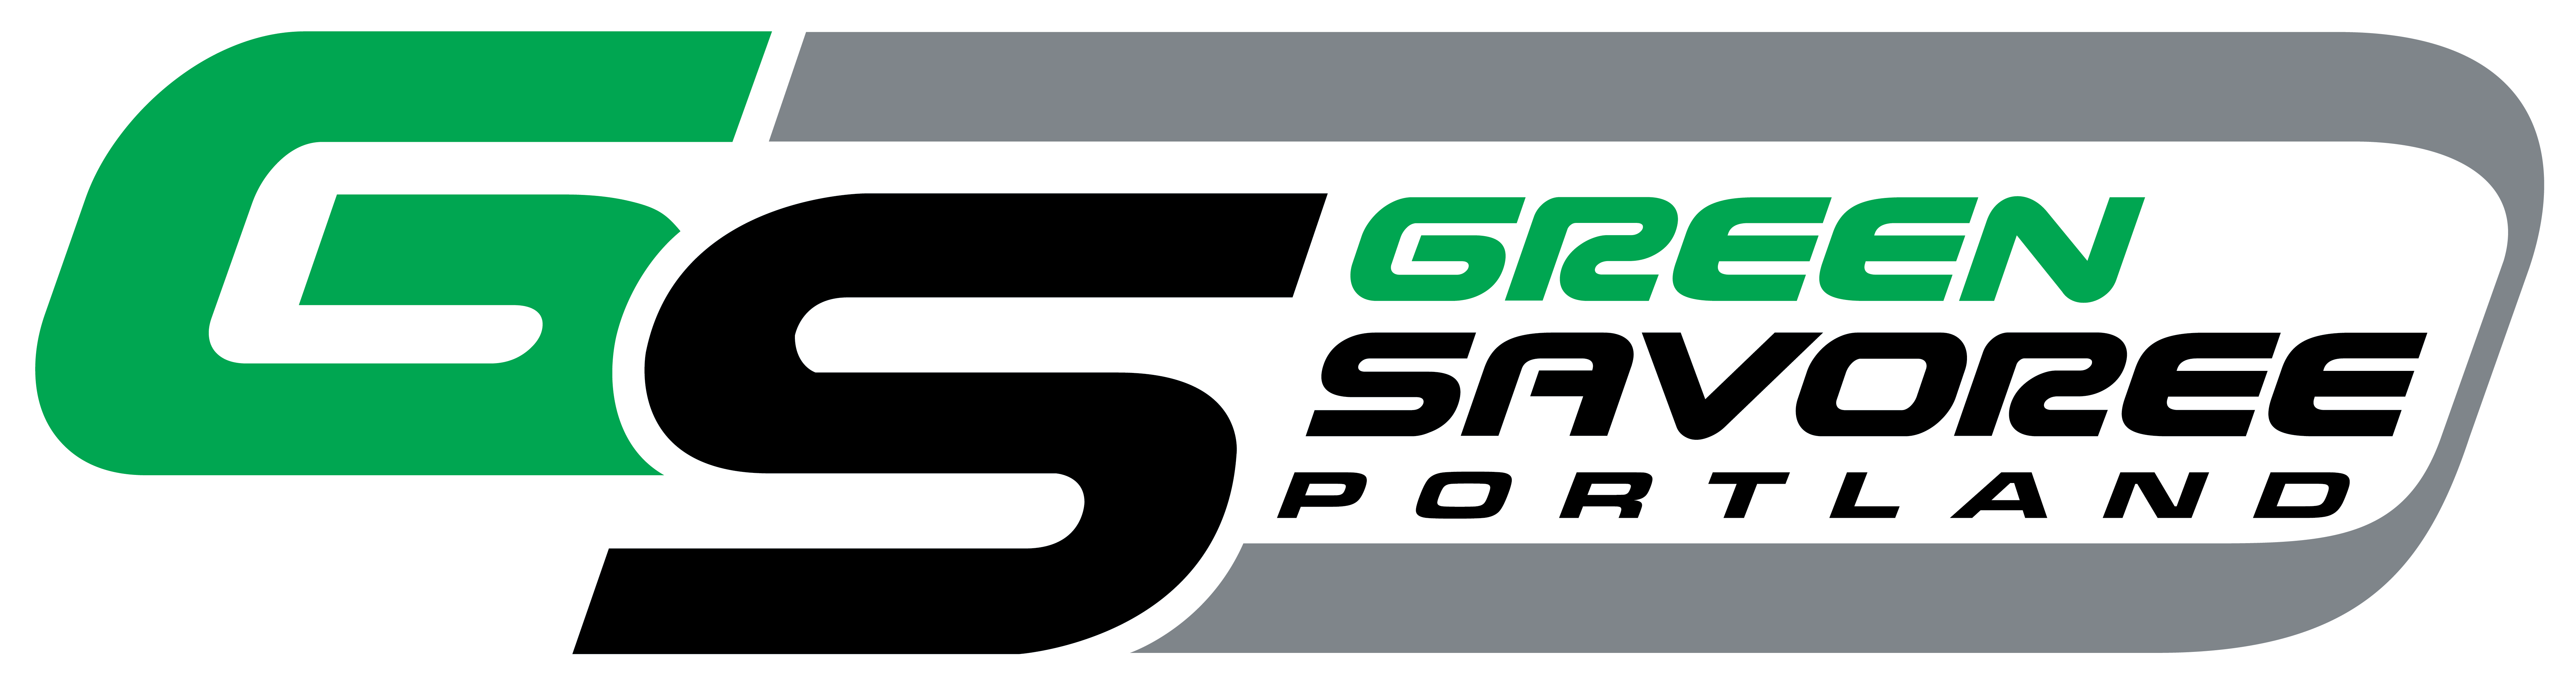 Grand Prix of Portland